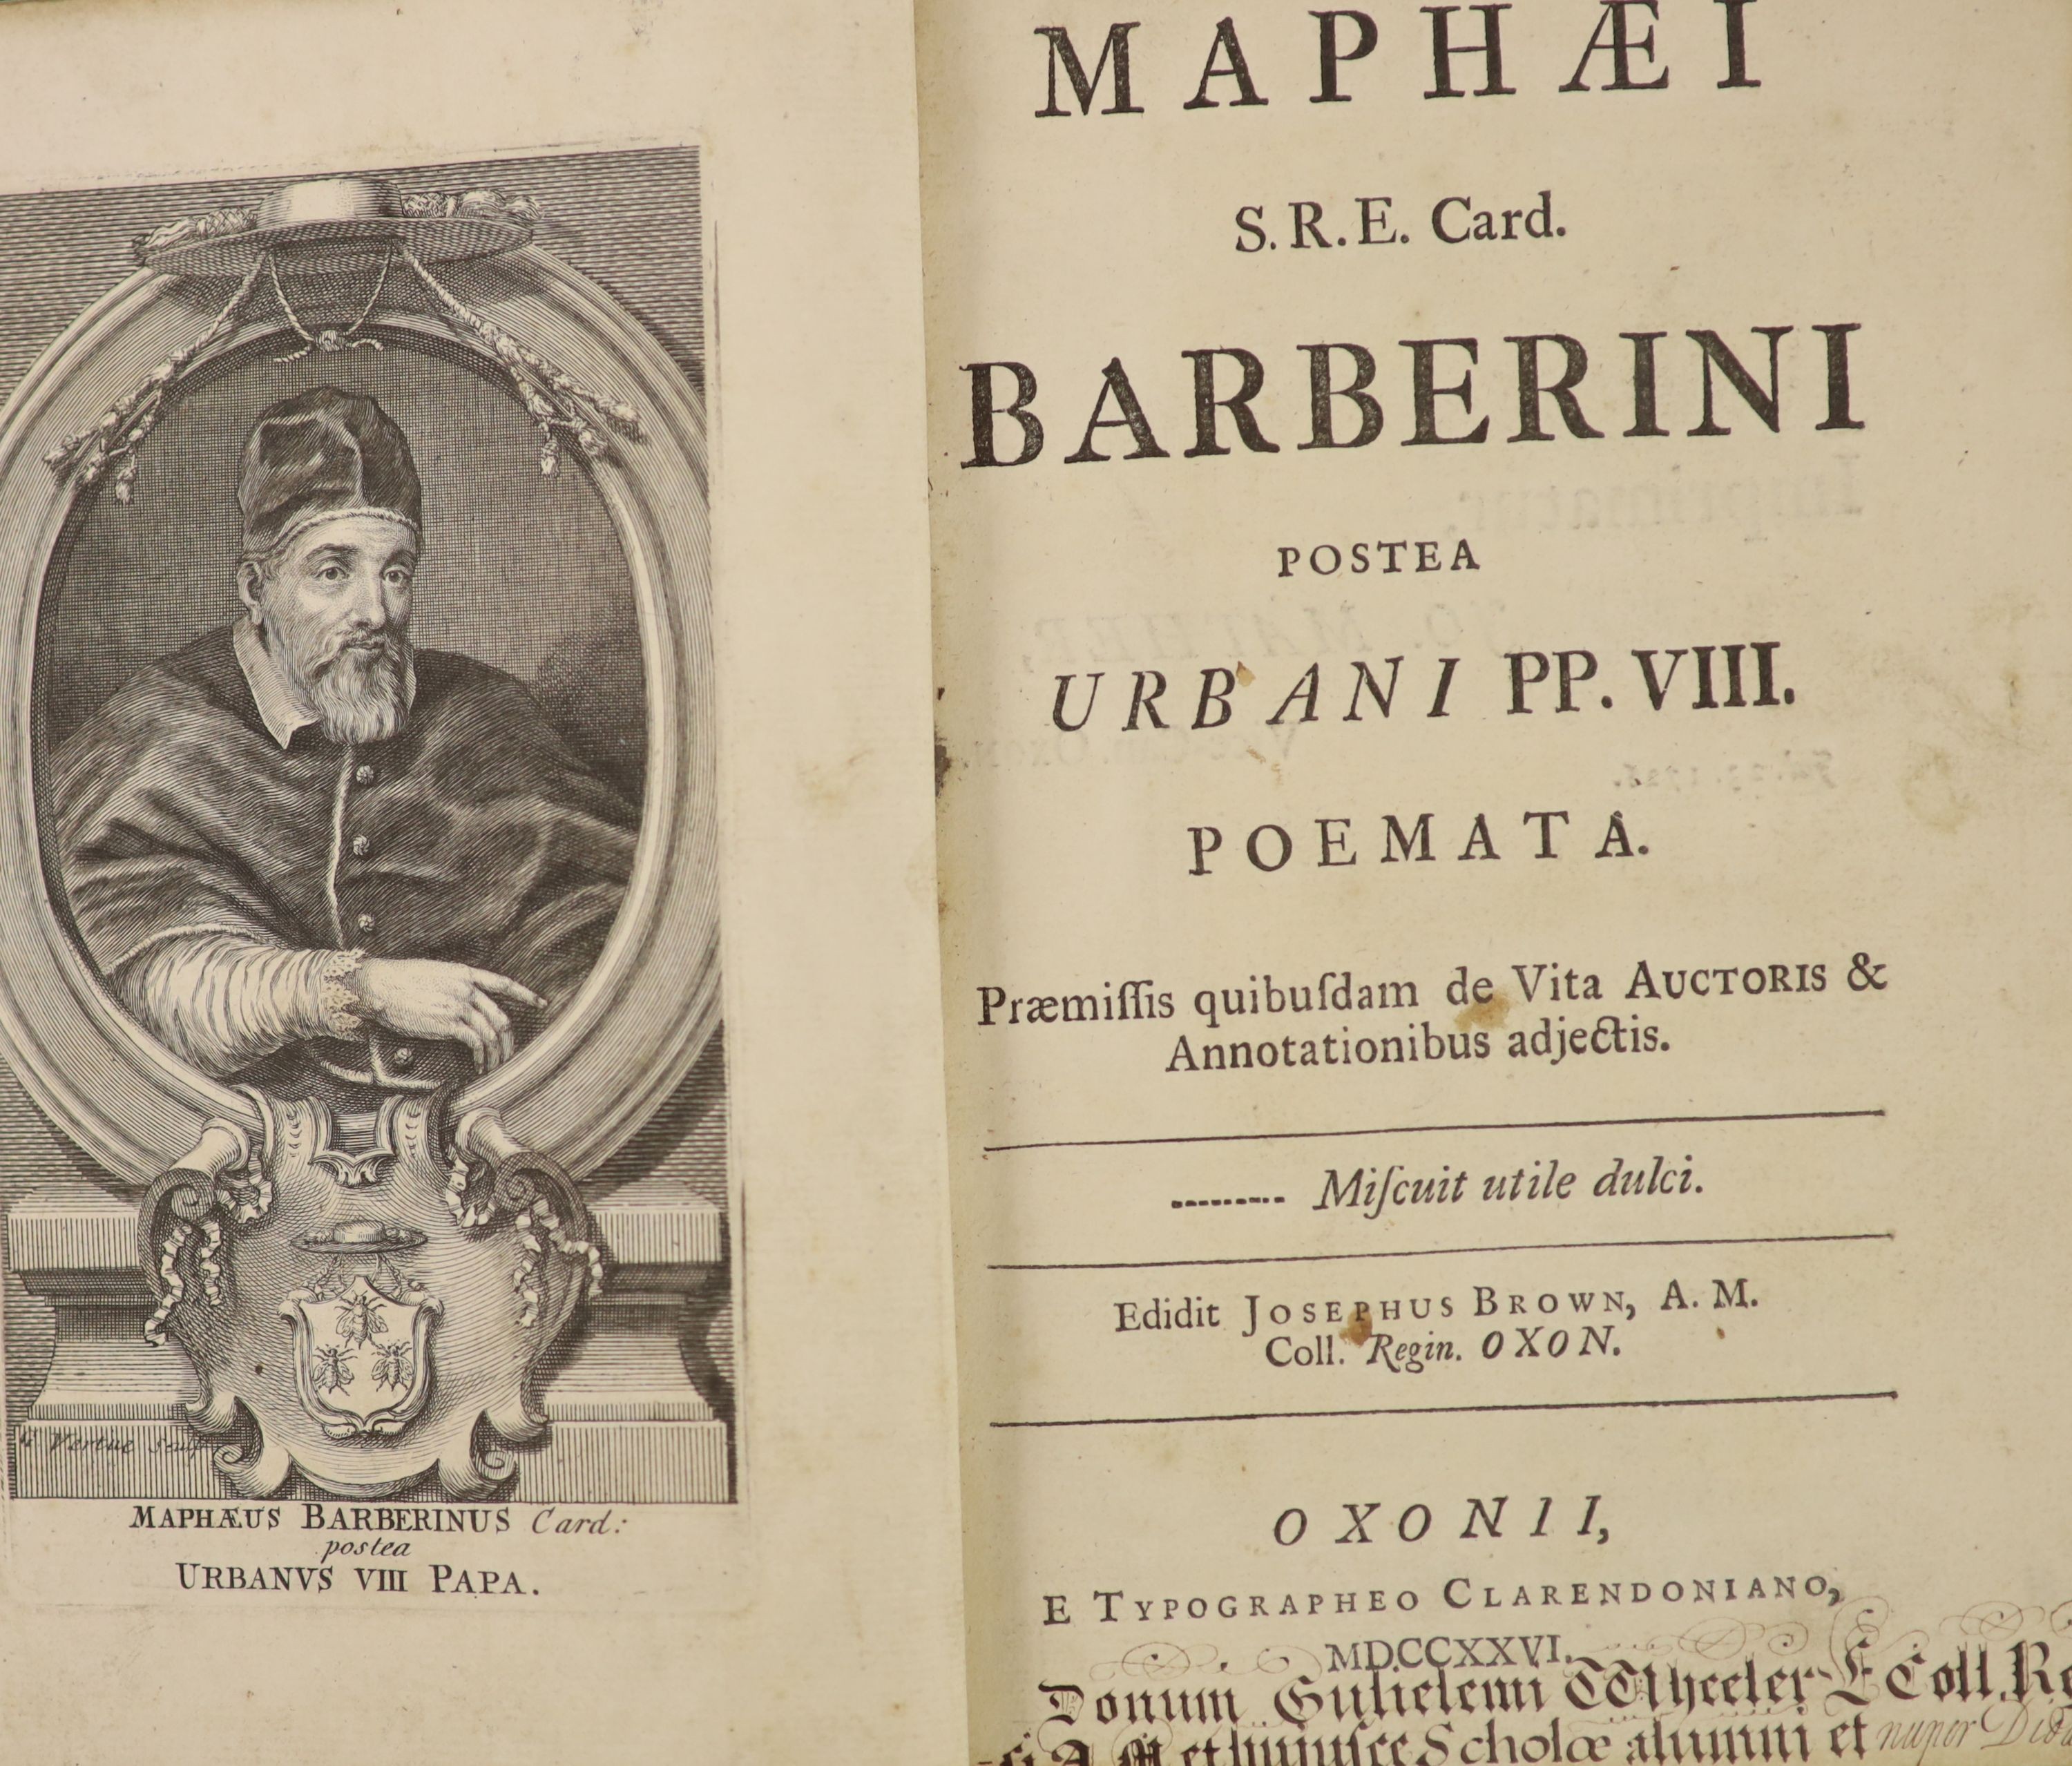 Barberini, Maffeo (Pope Urban VIII) - Poemata ... edidit Josephus Brown ... portrait frontis., 2 pictorial vignettes; newly rebound green half morocco and cloth, gilt-lettered panelled